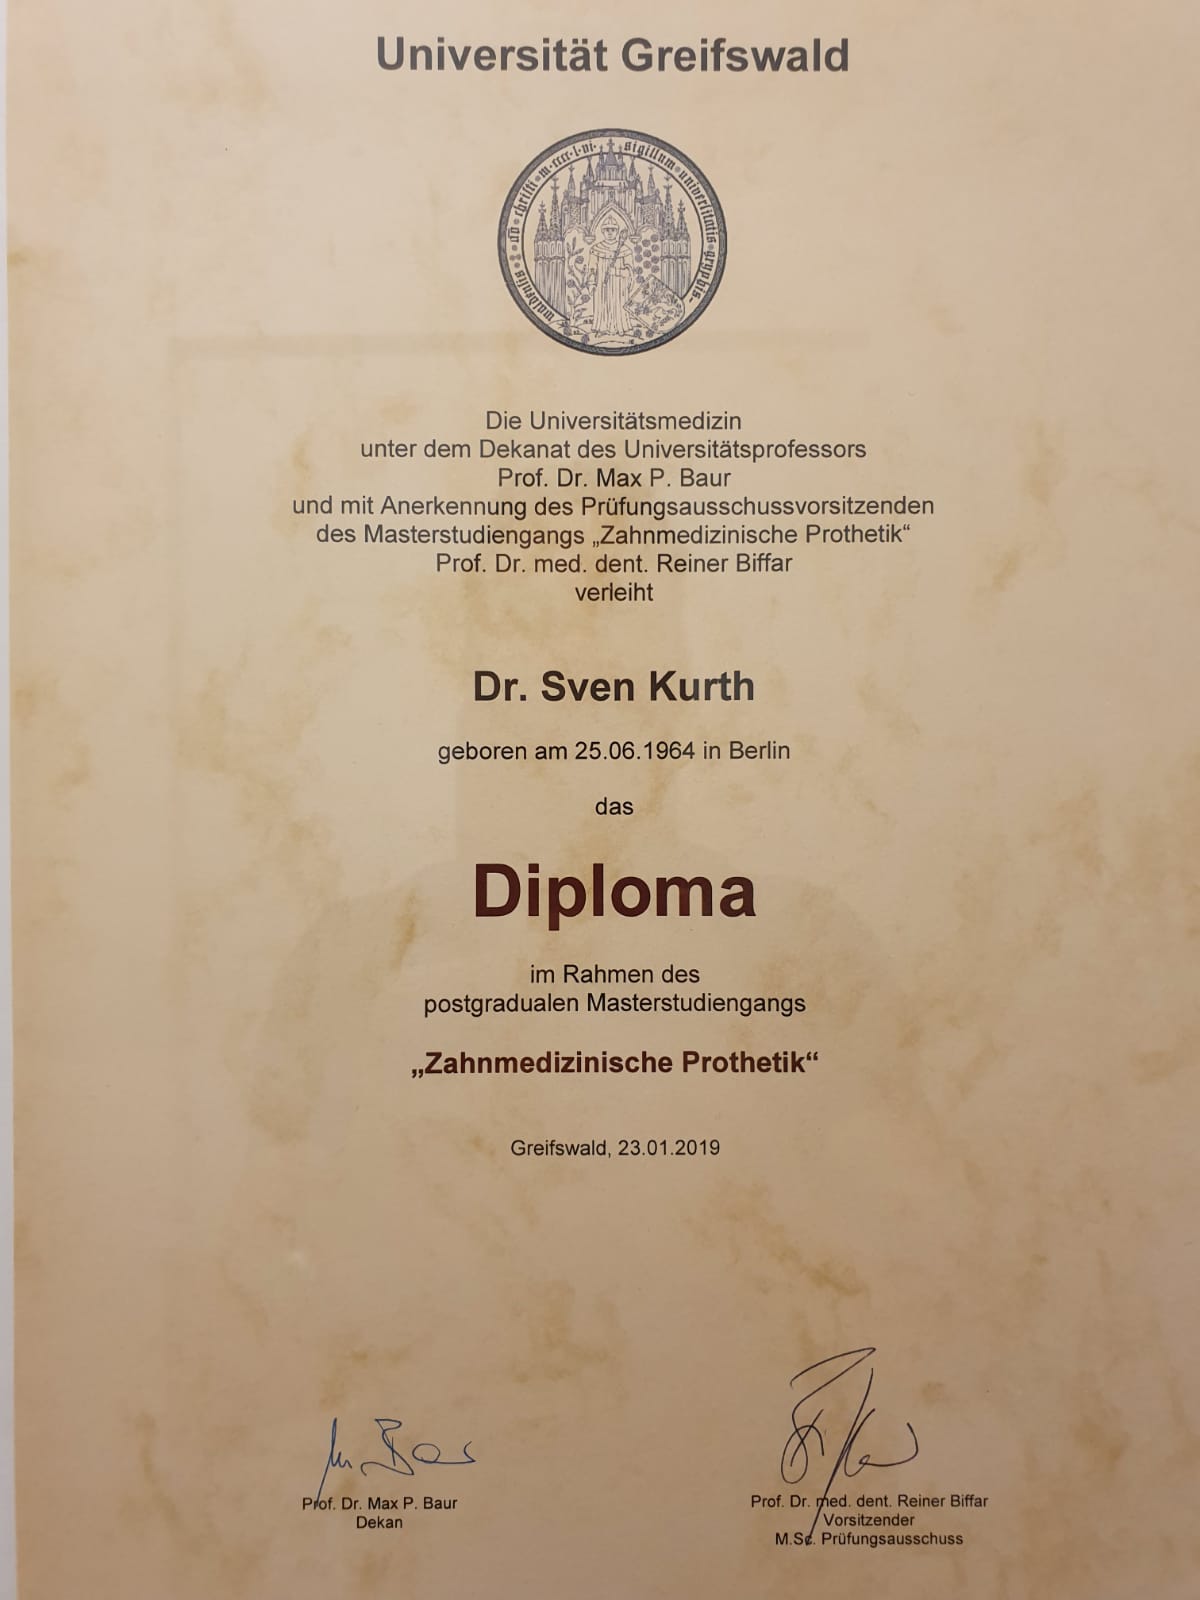 Diploma in Prothetik für Dr. Sven Kurth.